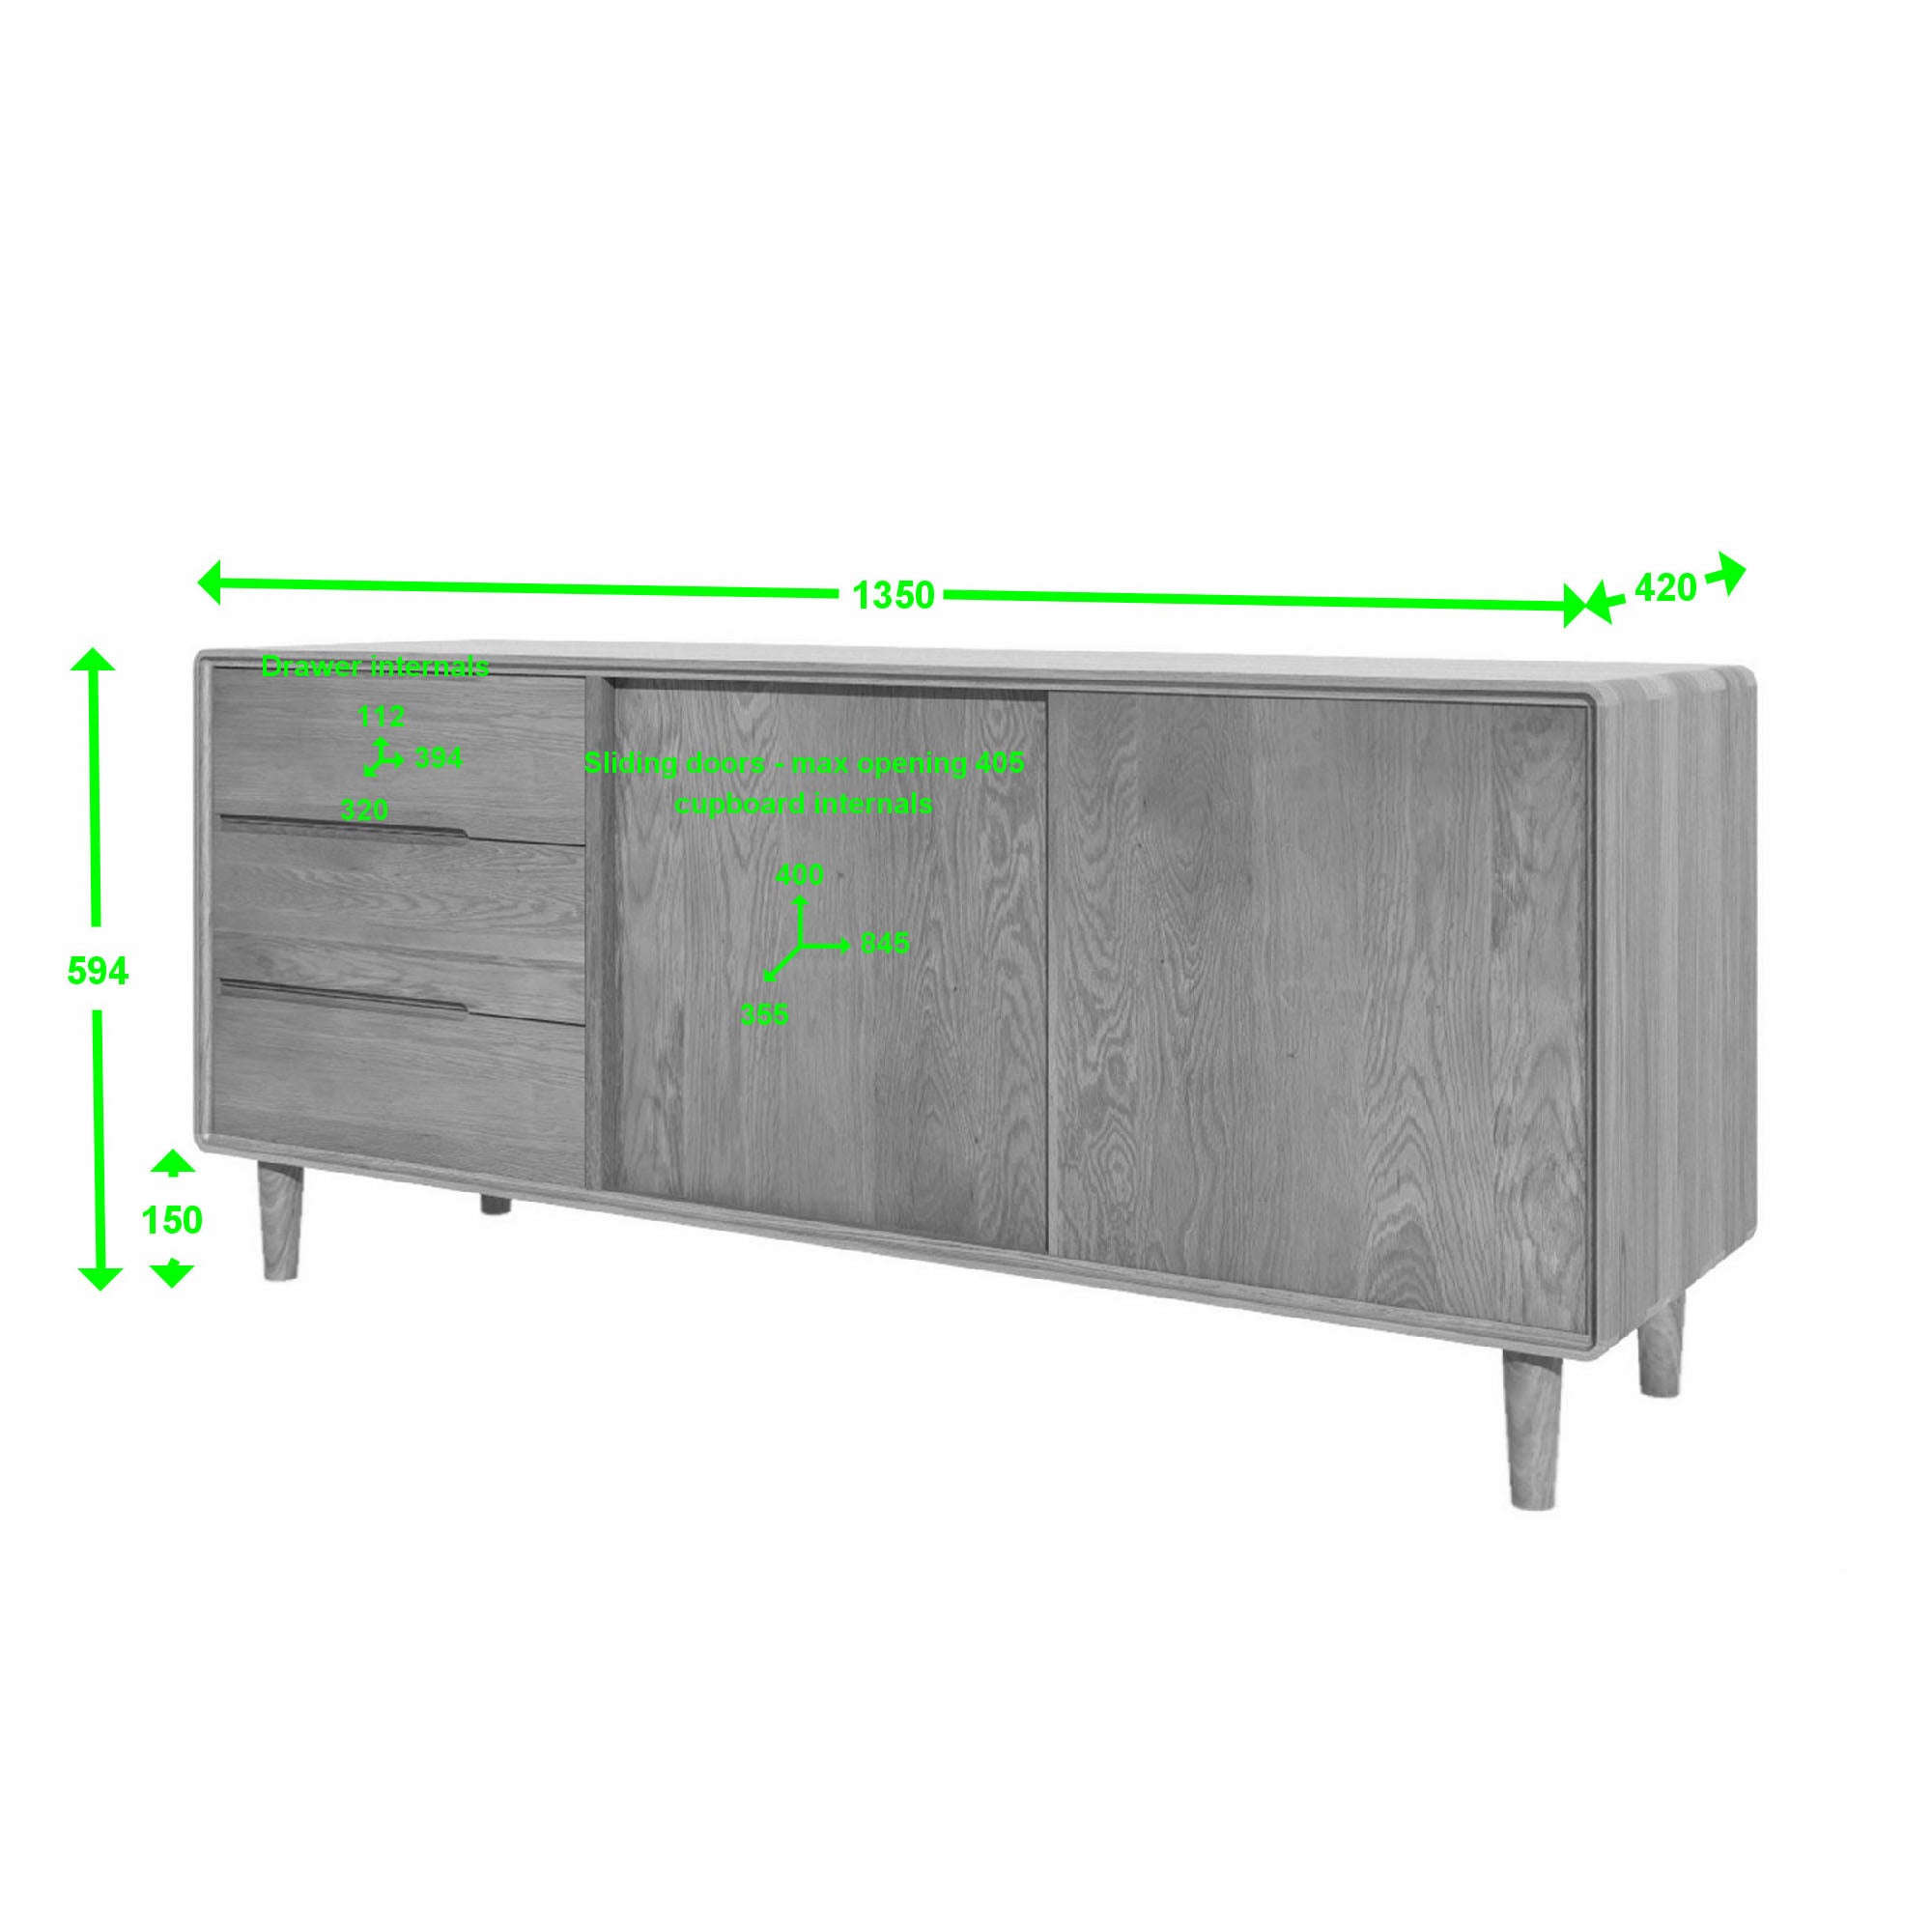 Nordic Scandic Oak Sideboard Furniture Range from Top Secret Furniture